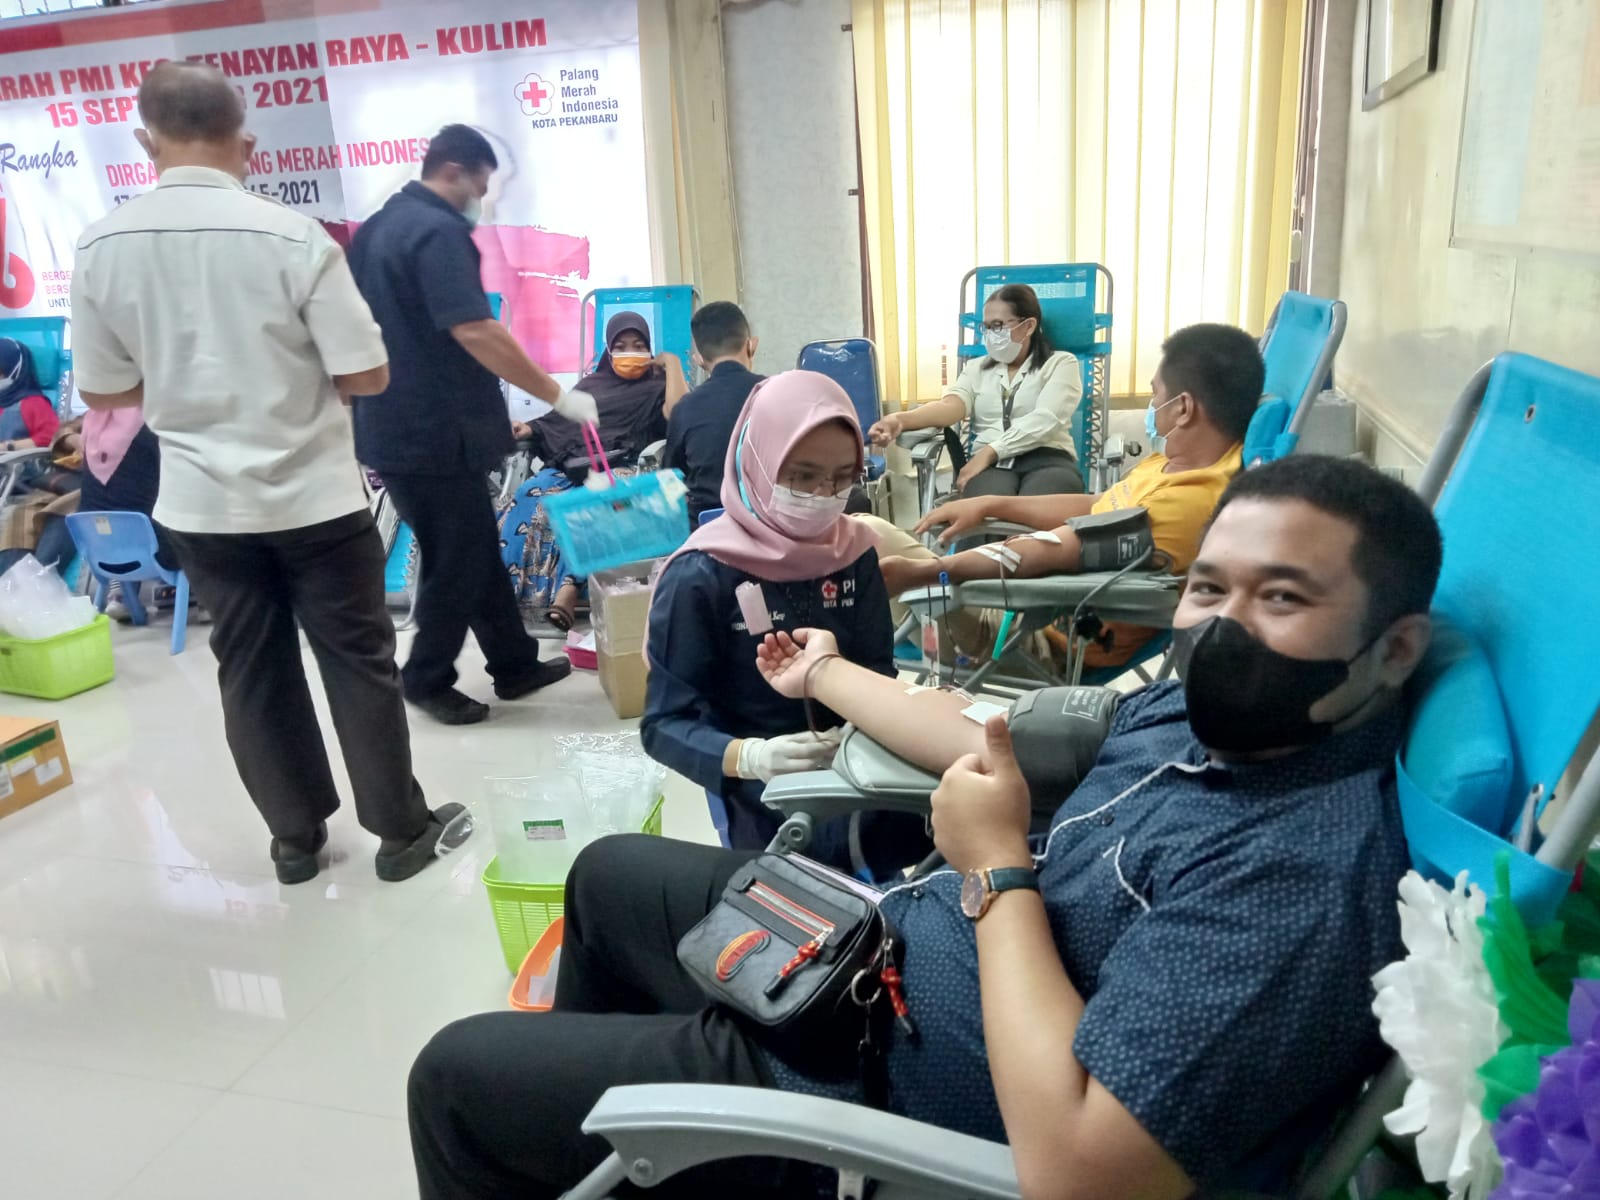 Peduli Sesama, Ratusan Warga Tenayan Raya Antusias Ikuti Donor Darah 